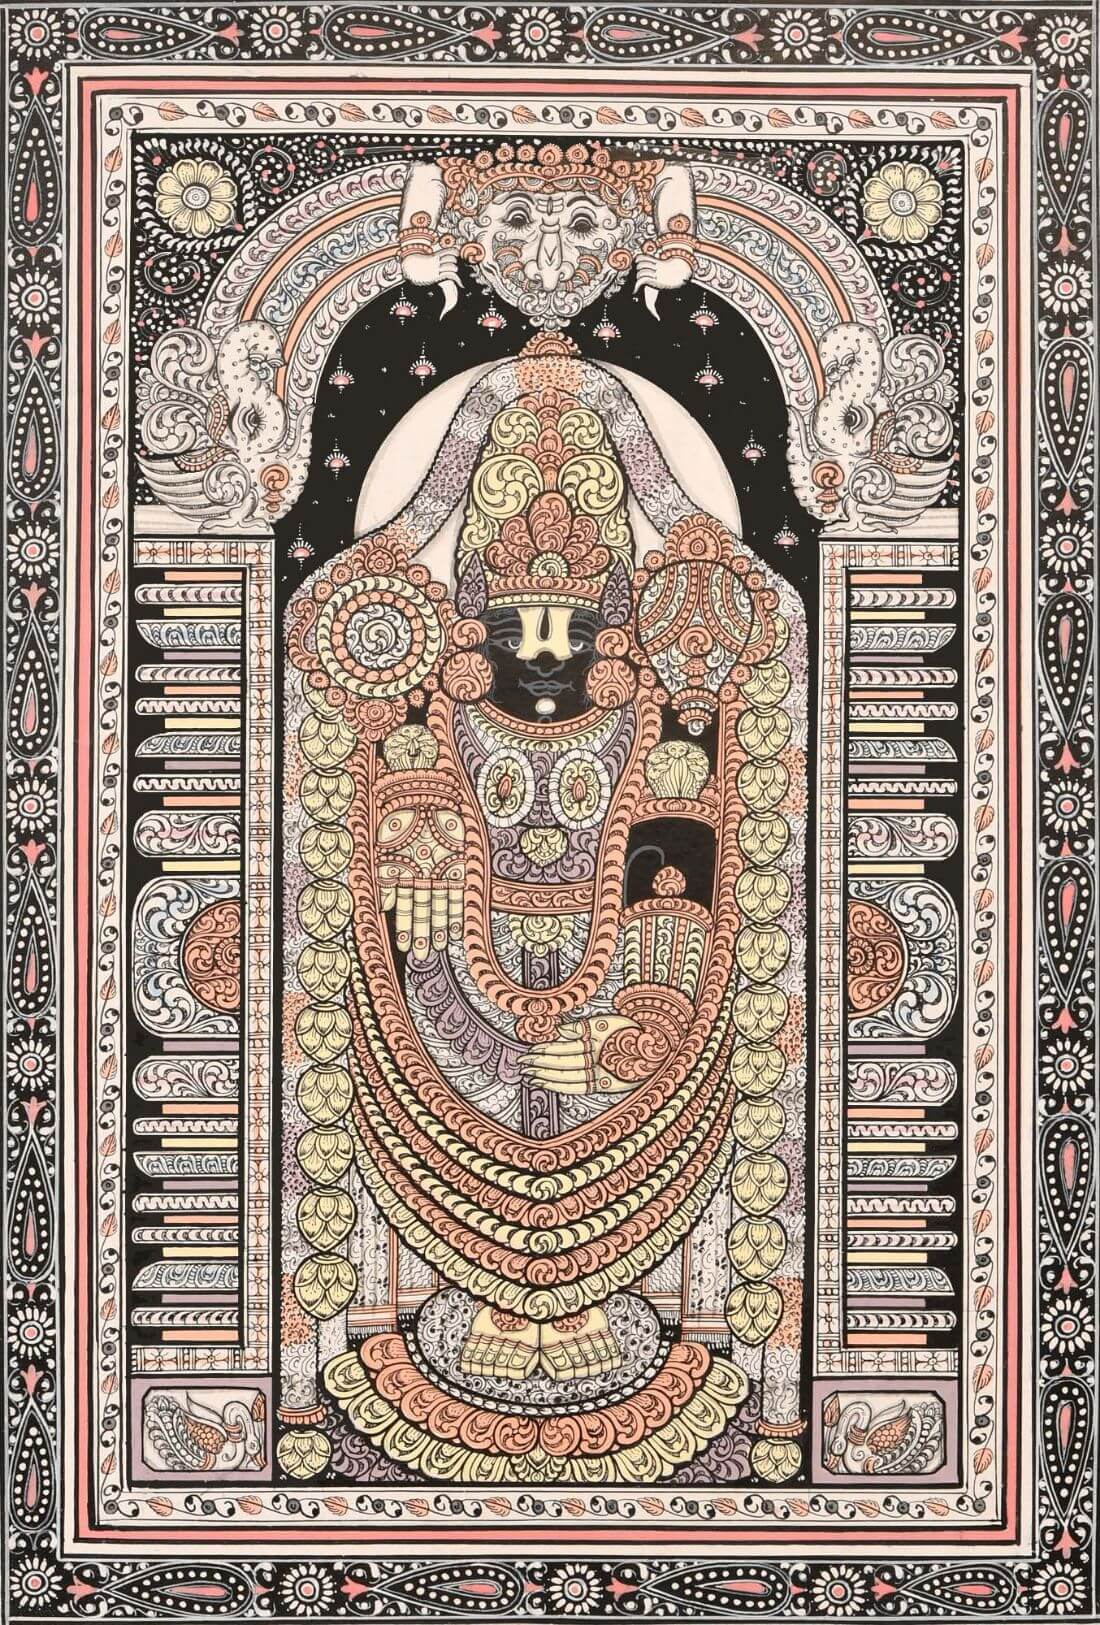 Lord Tirupati Balaji - Venkateshwara Srikalahasti - Art Prints by ...